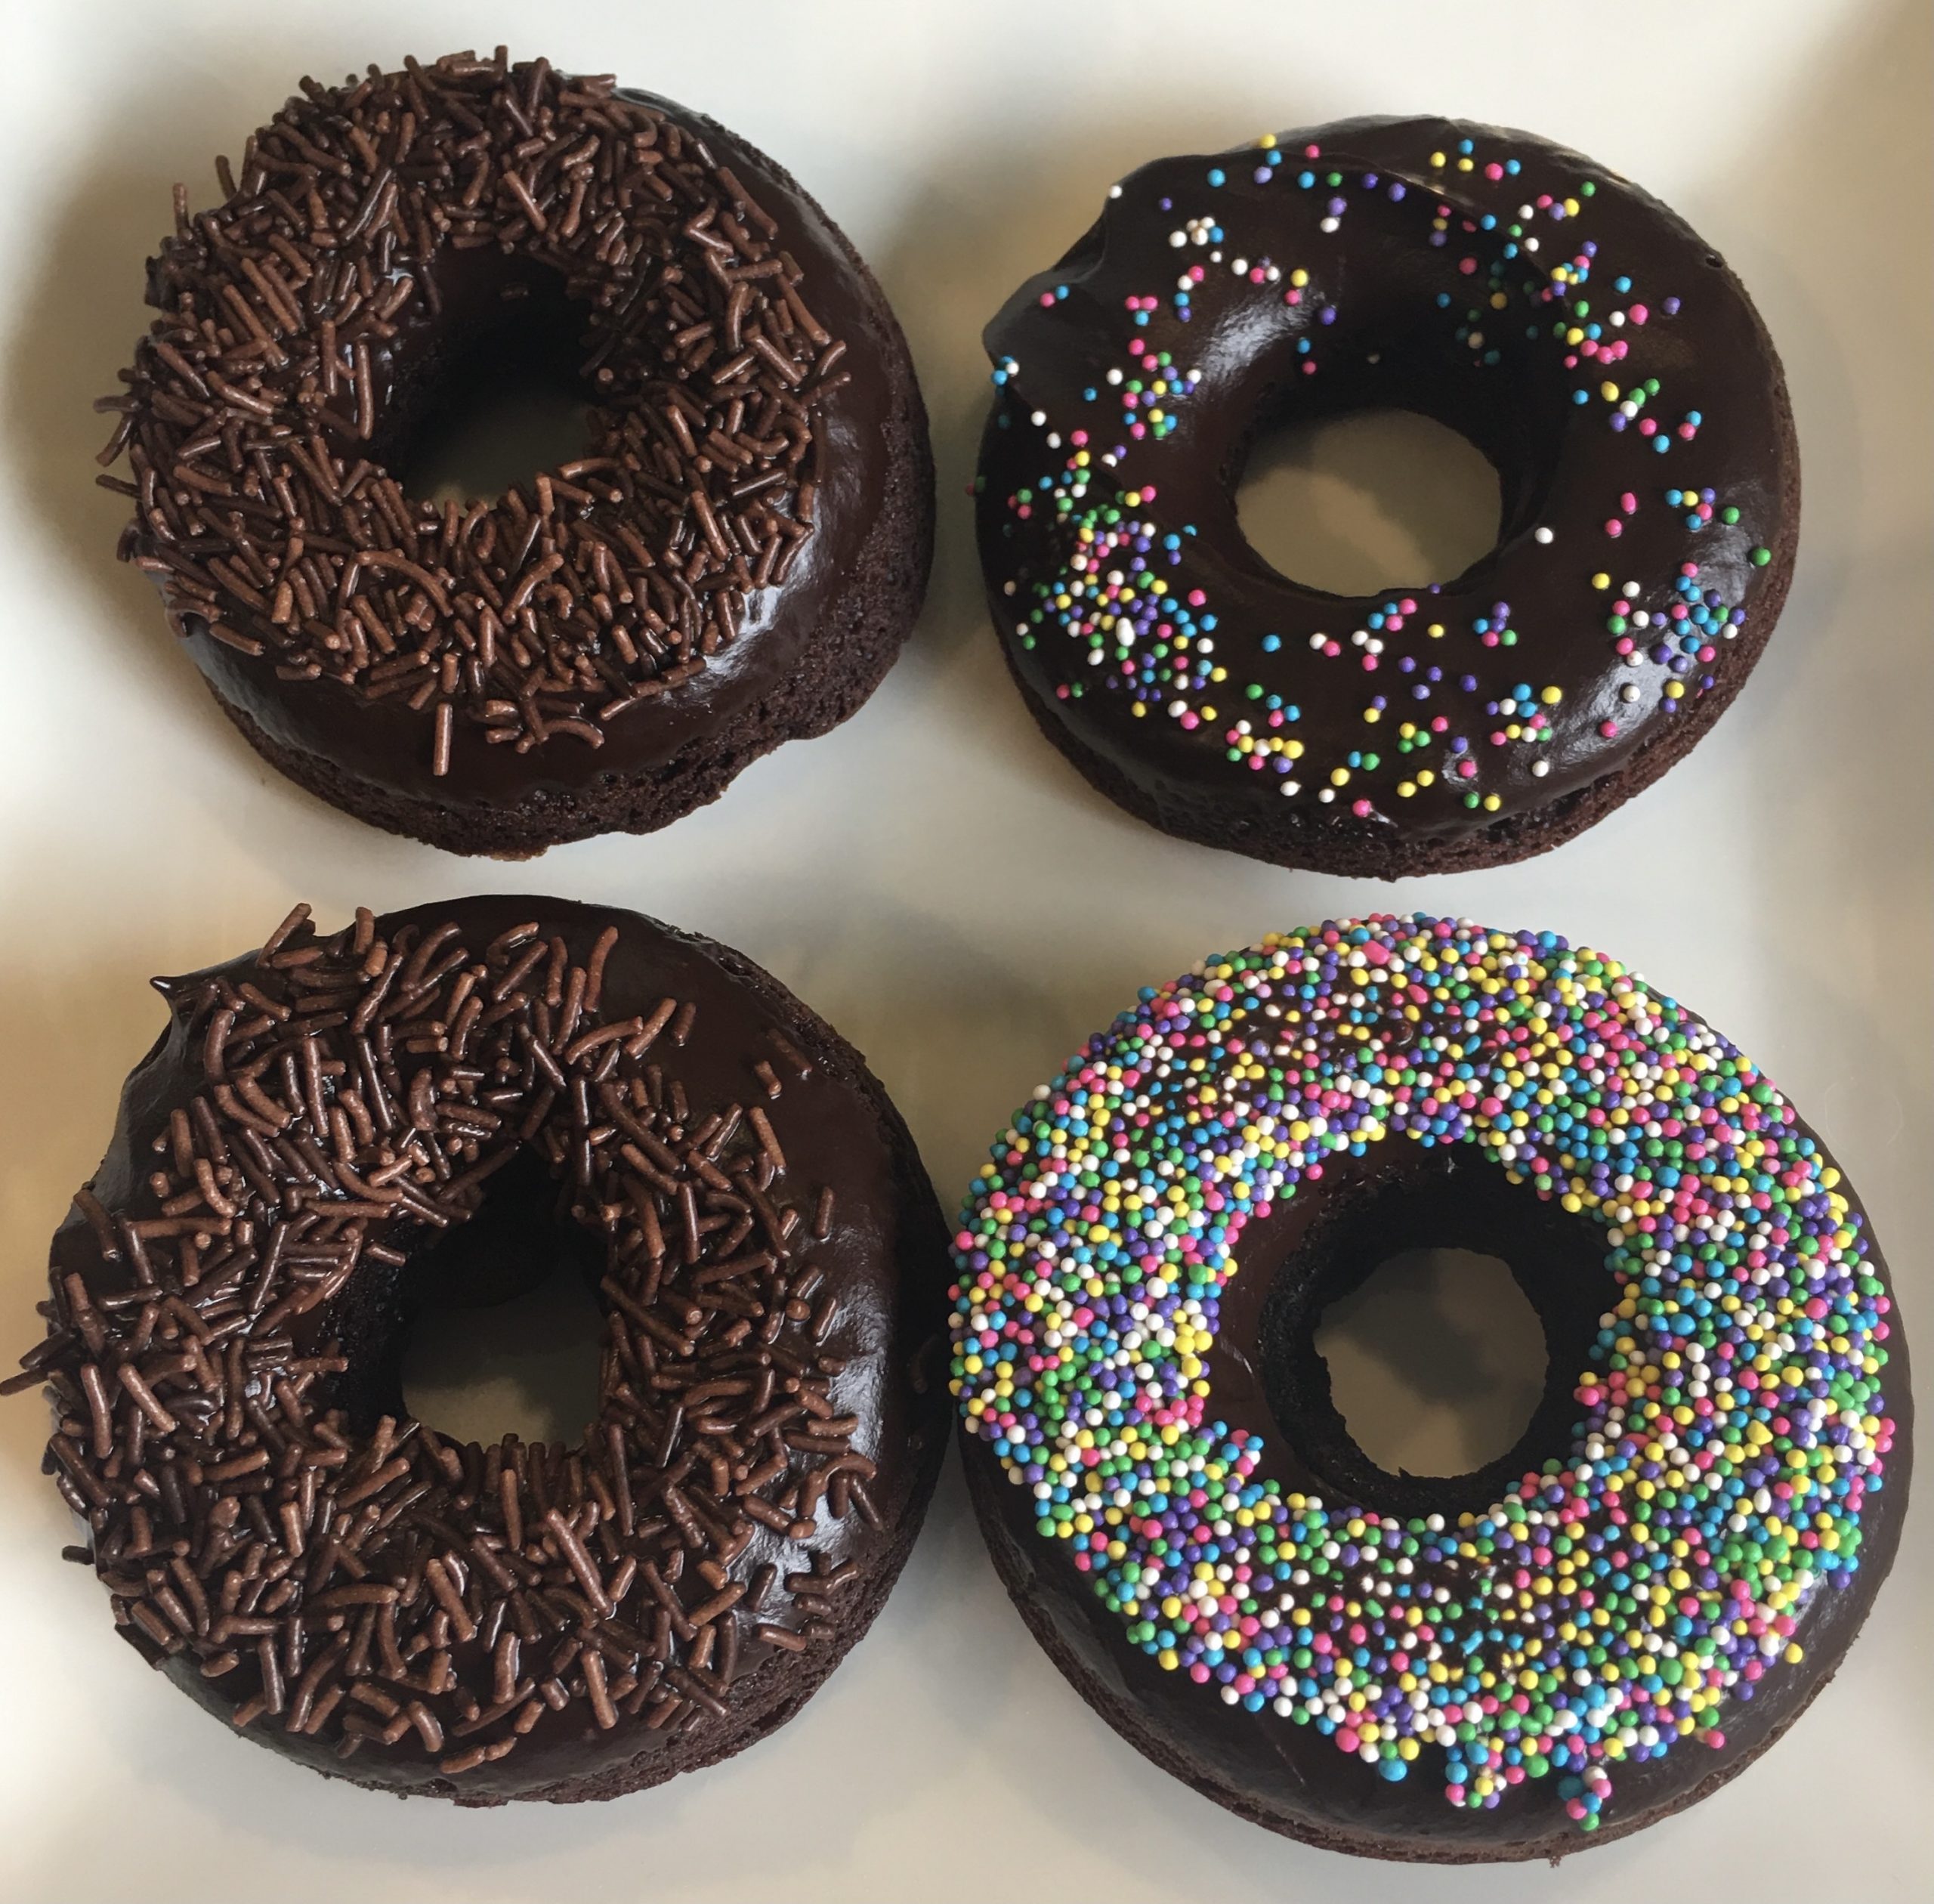 baked chocolate doughnuts